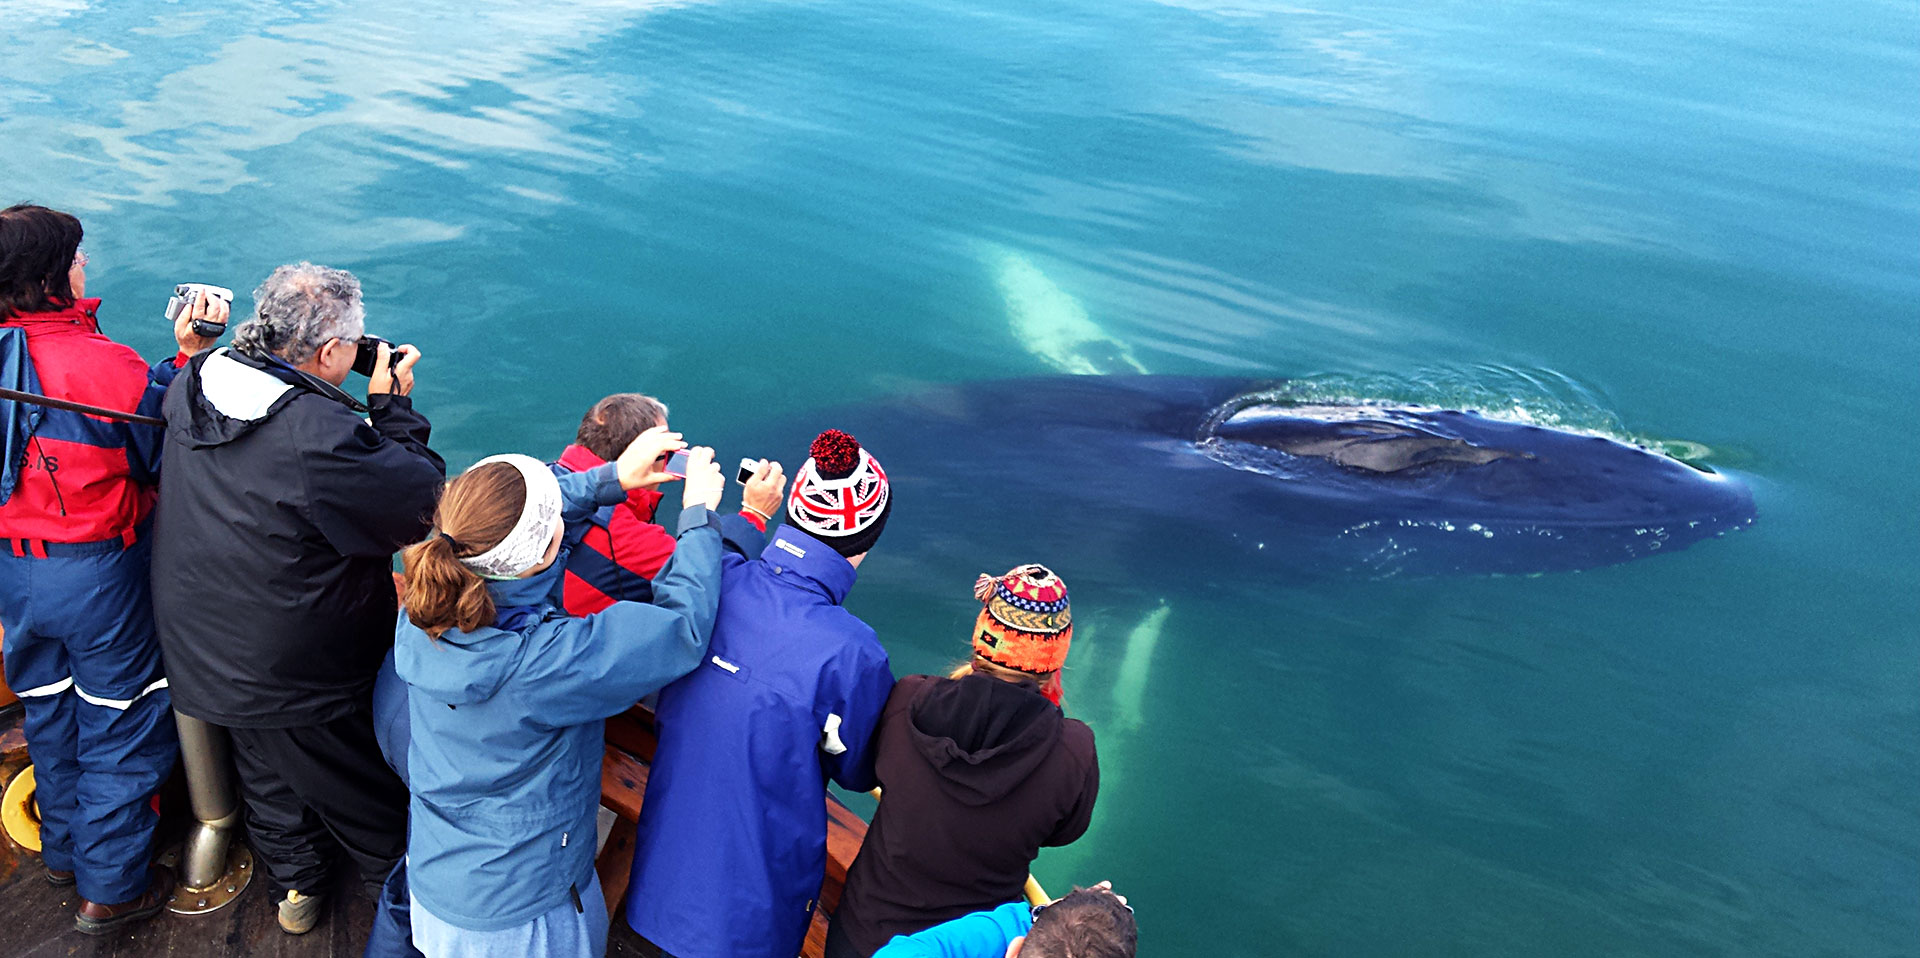 Китовое сафари в Исландии